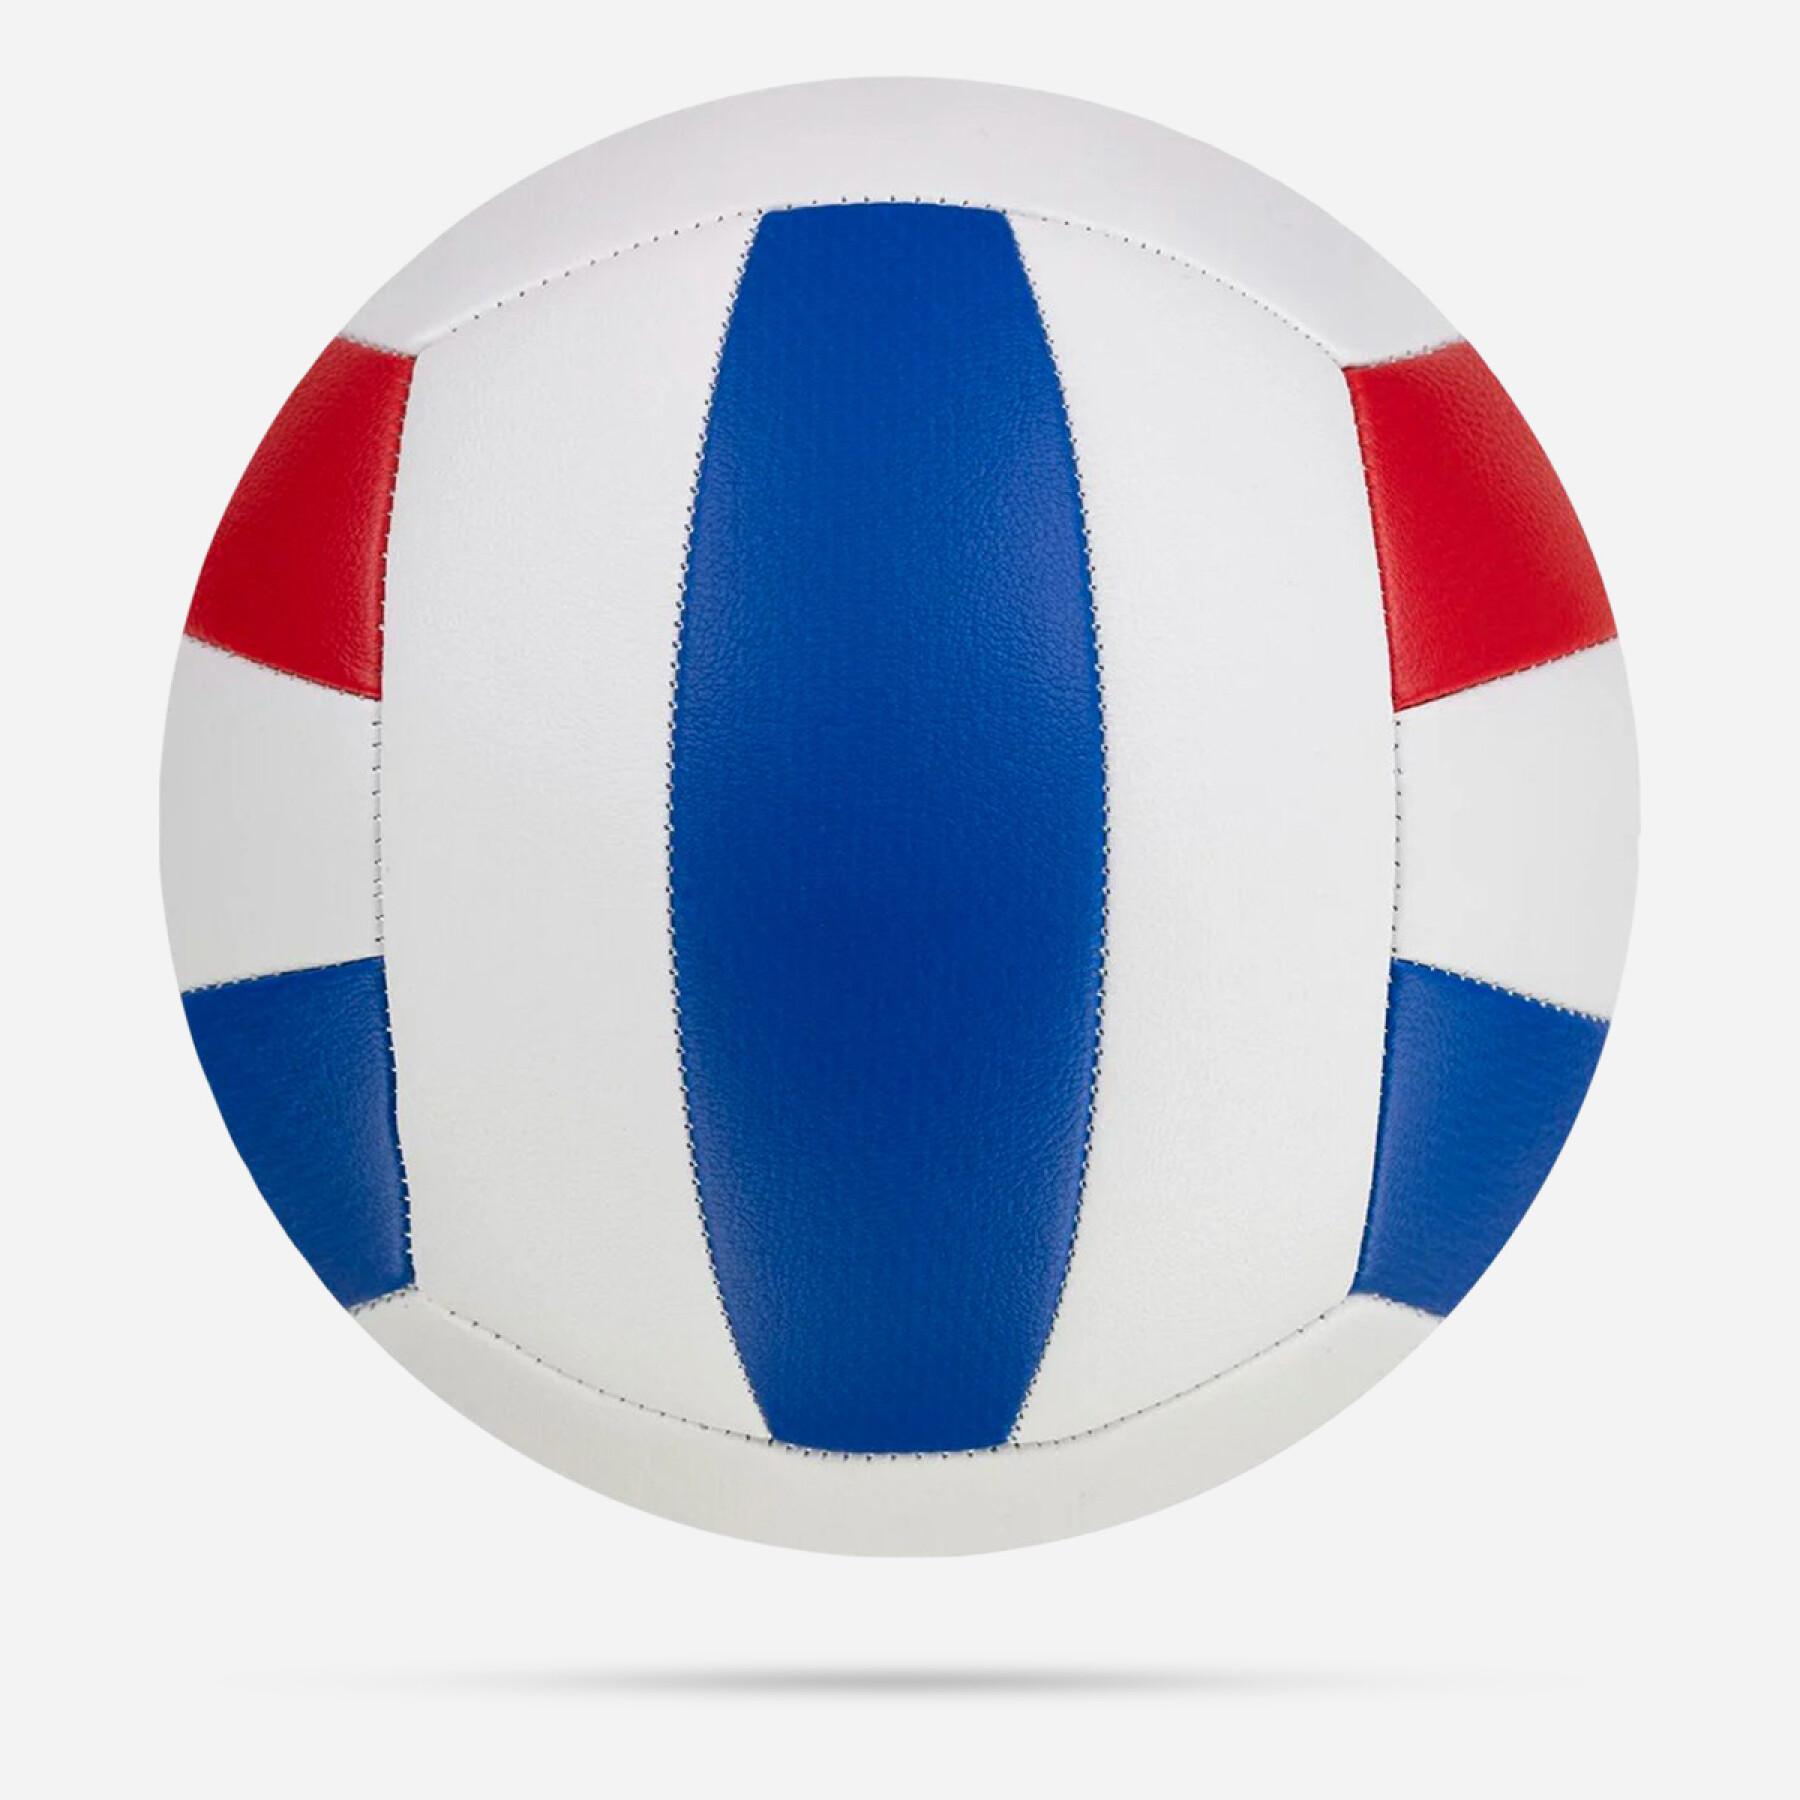 Ballon dégonflé Nike All Court Volleyball